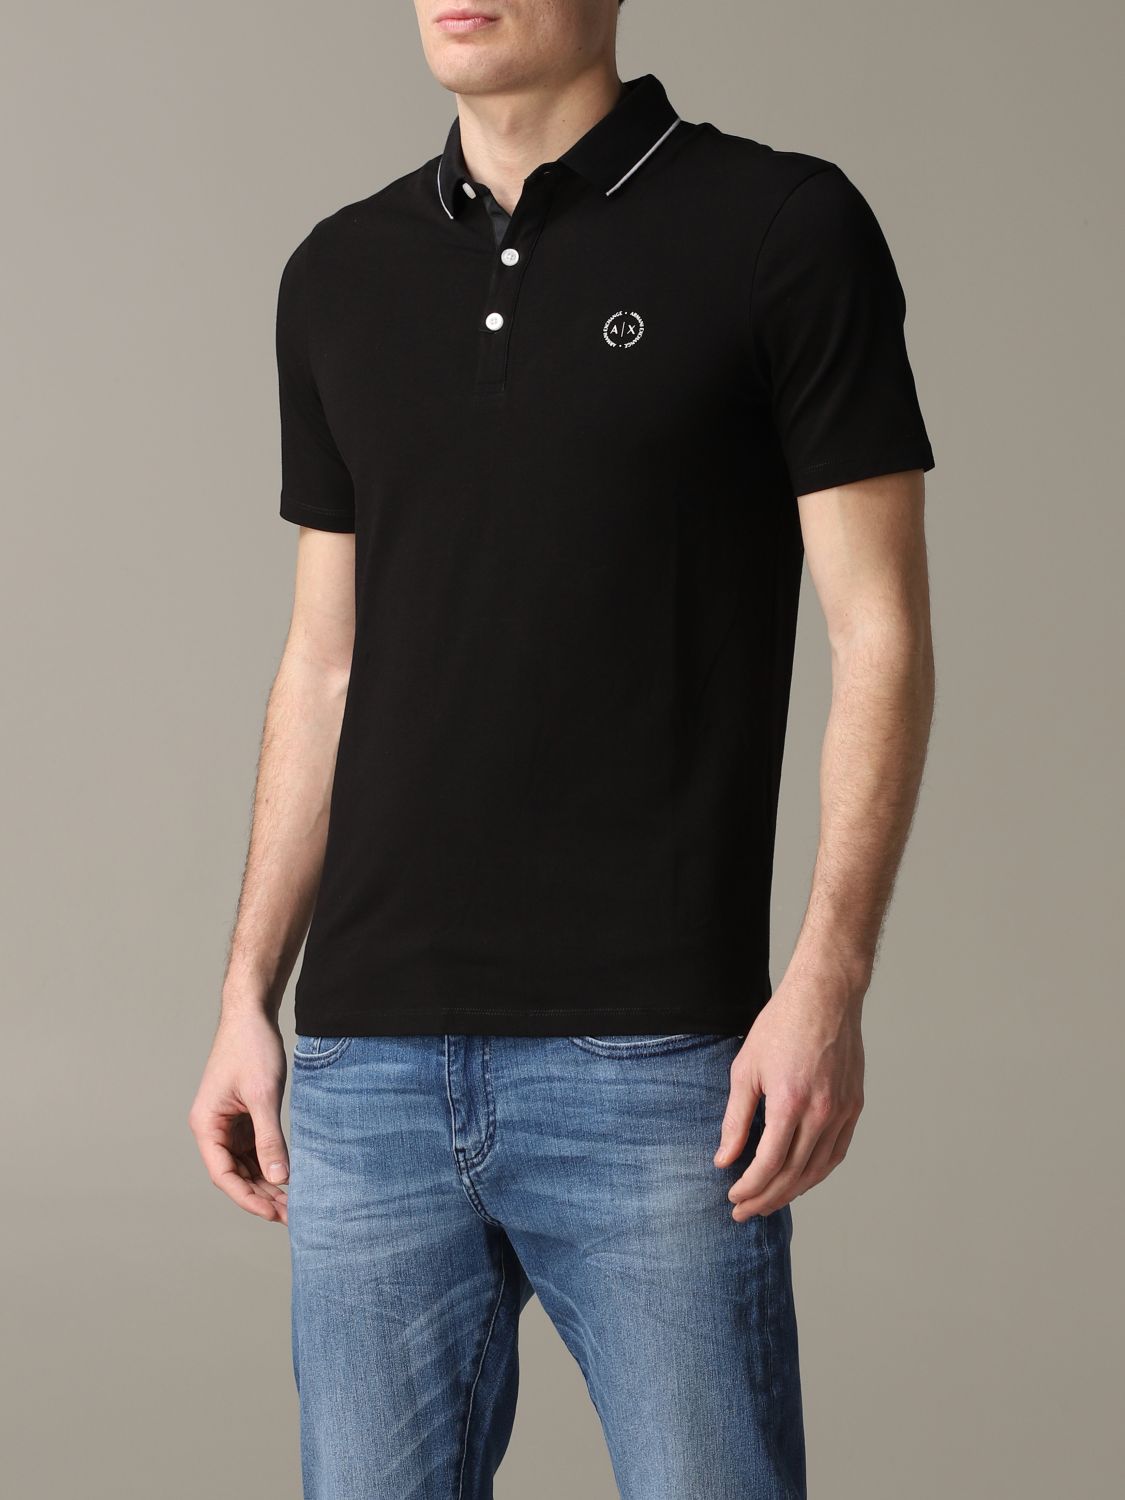 black armani polo shirt